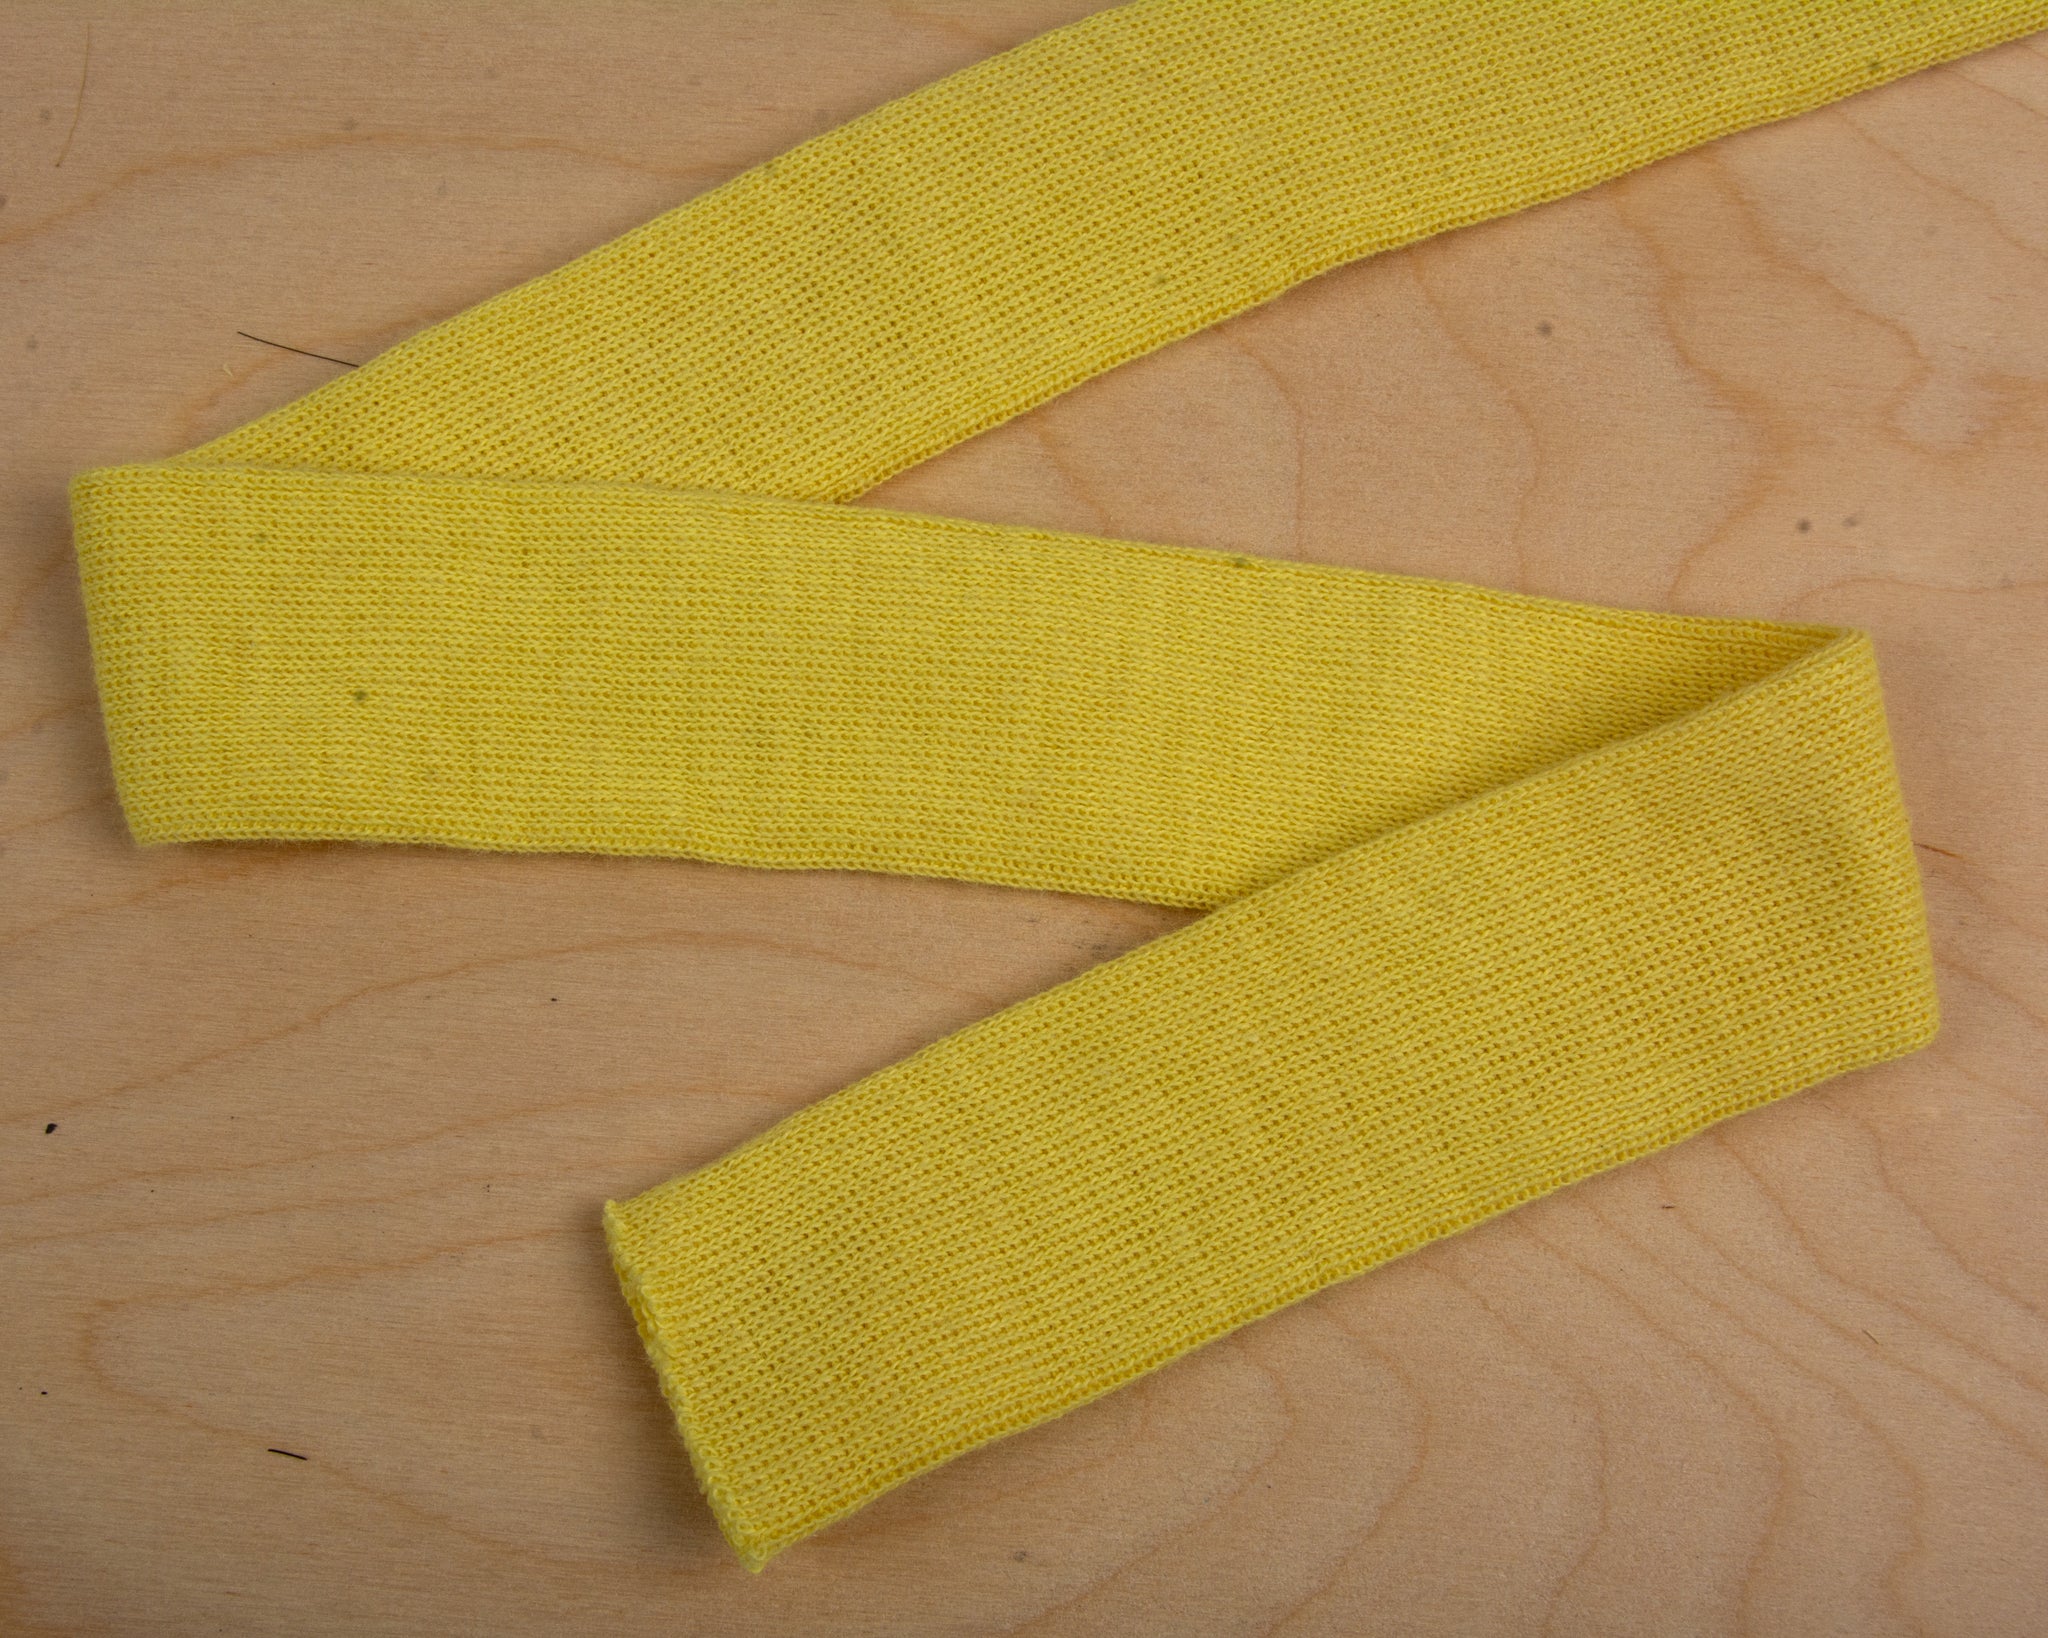 Kevlar Sock per foot (2 sizes) – GiantLeapRocketry